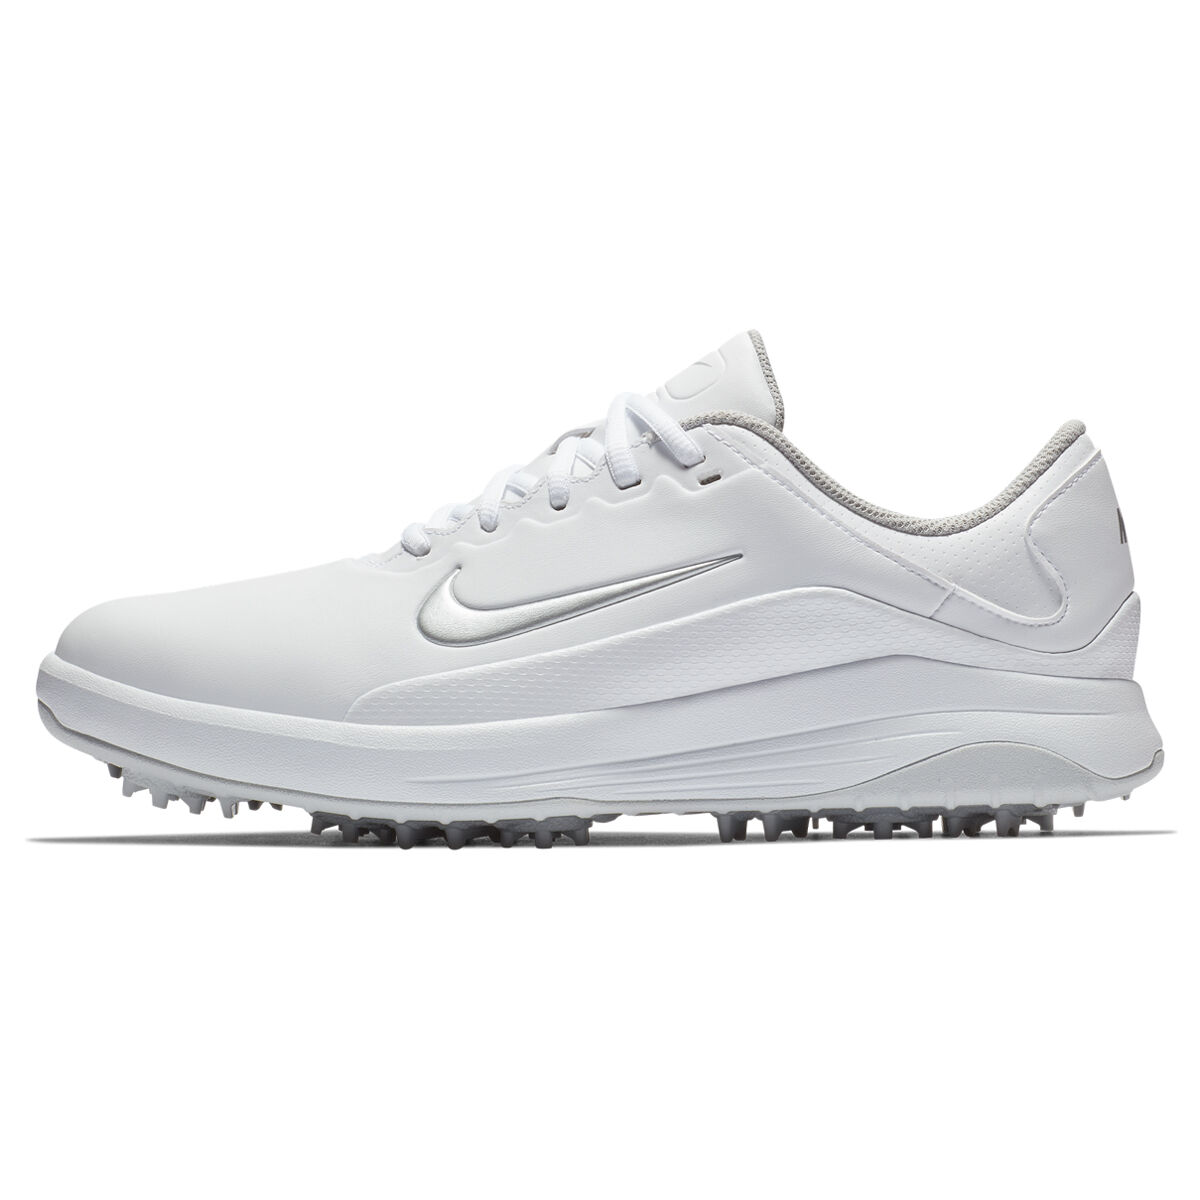 Nike Vapor Mens Golf Shoes White/Silver 